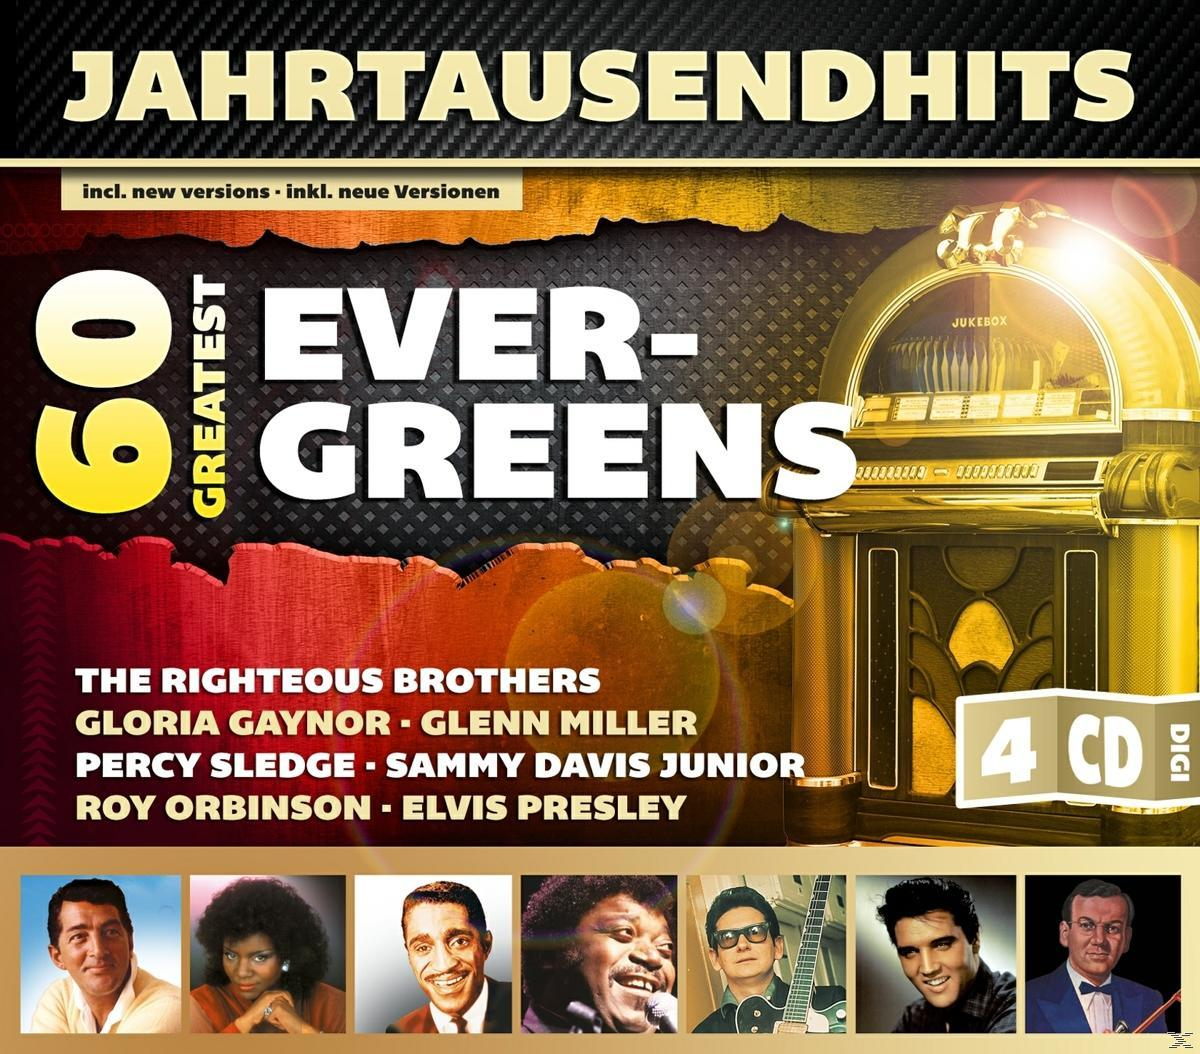 VARIOUS - Jahrtausendhits - - (CD) Greatest Evergreens 60